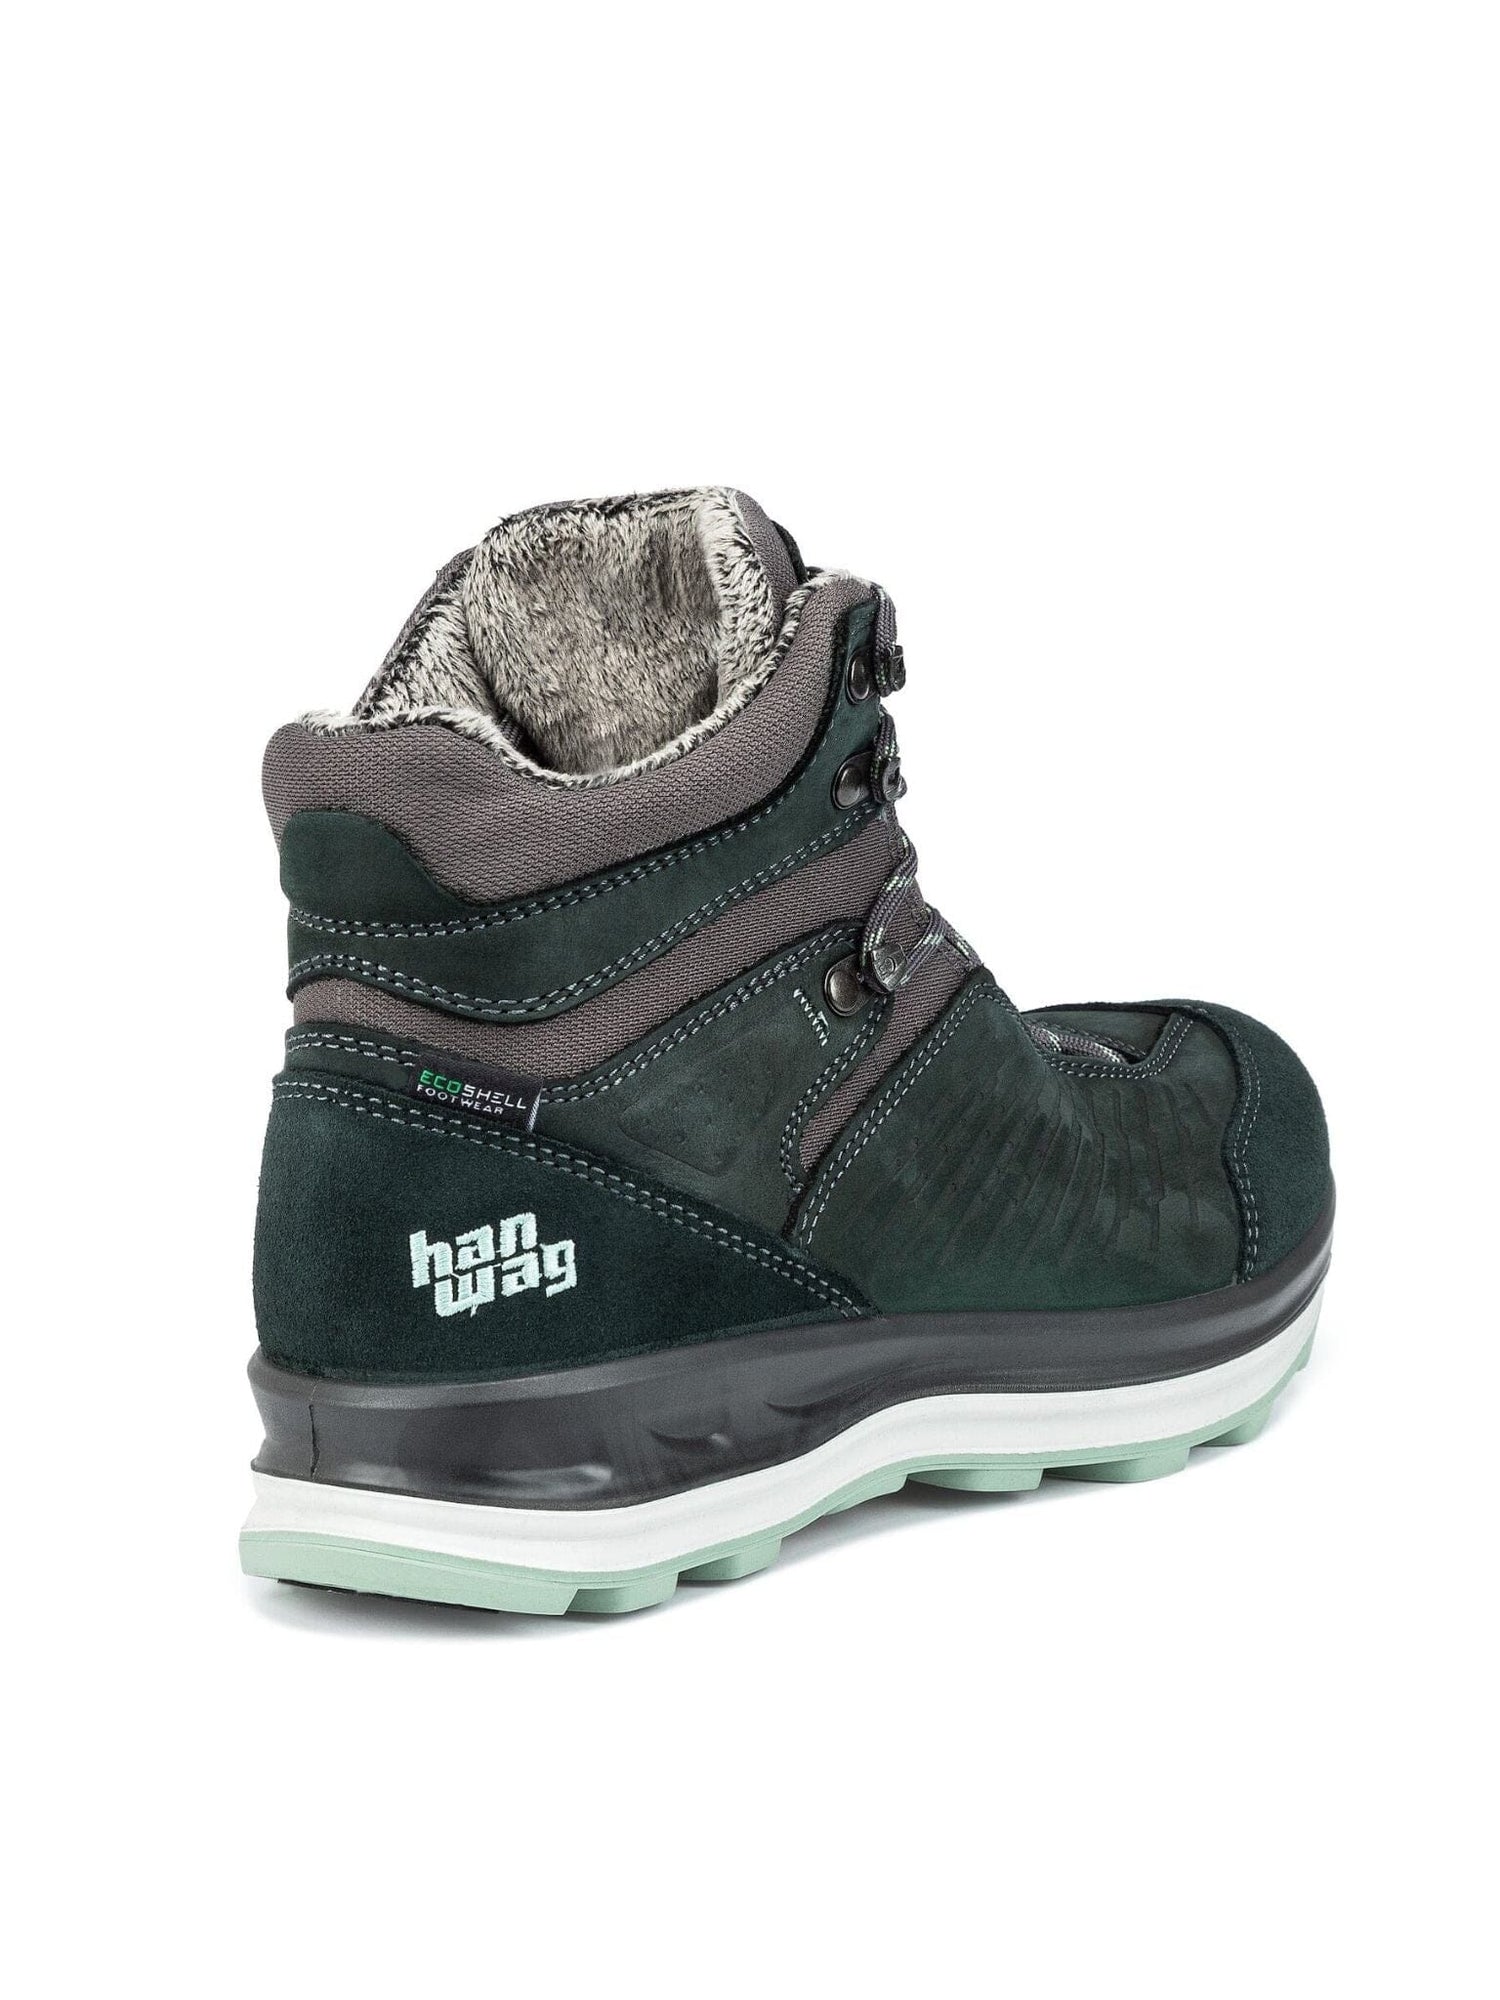 Hanwag W's Bluestrait Mid ES Winter Shoes - OEKO-TEX Certified Leather Petrol Mint Shoes